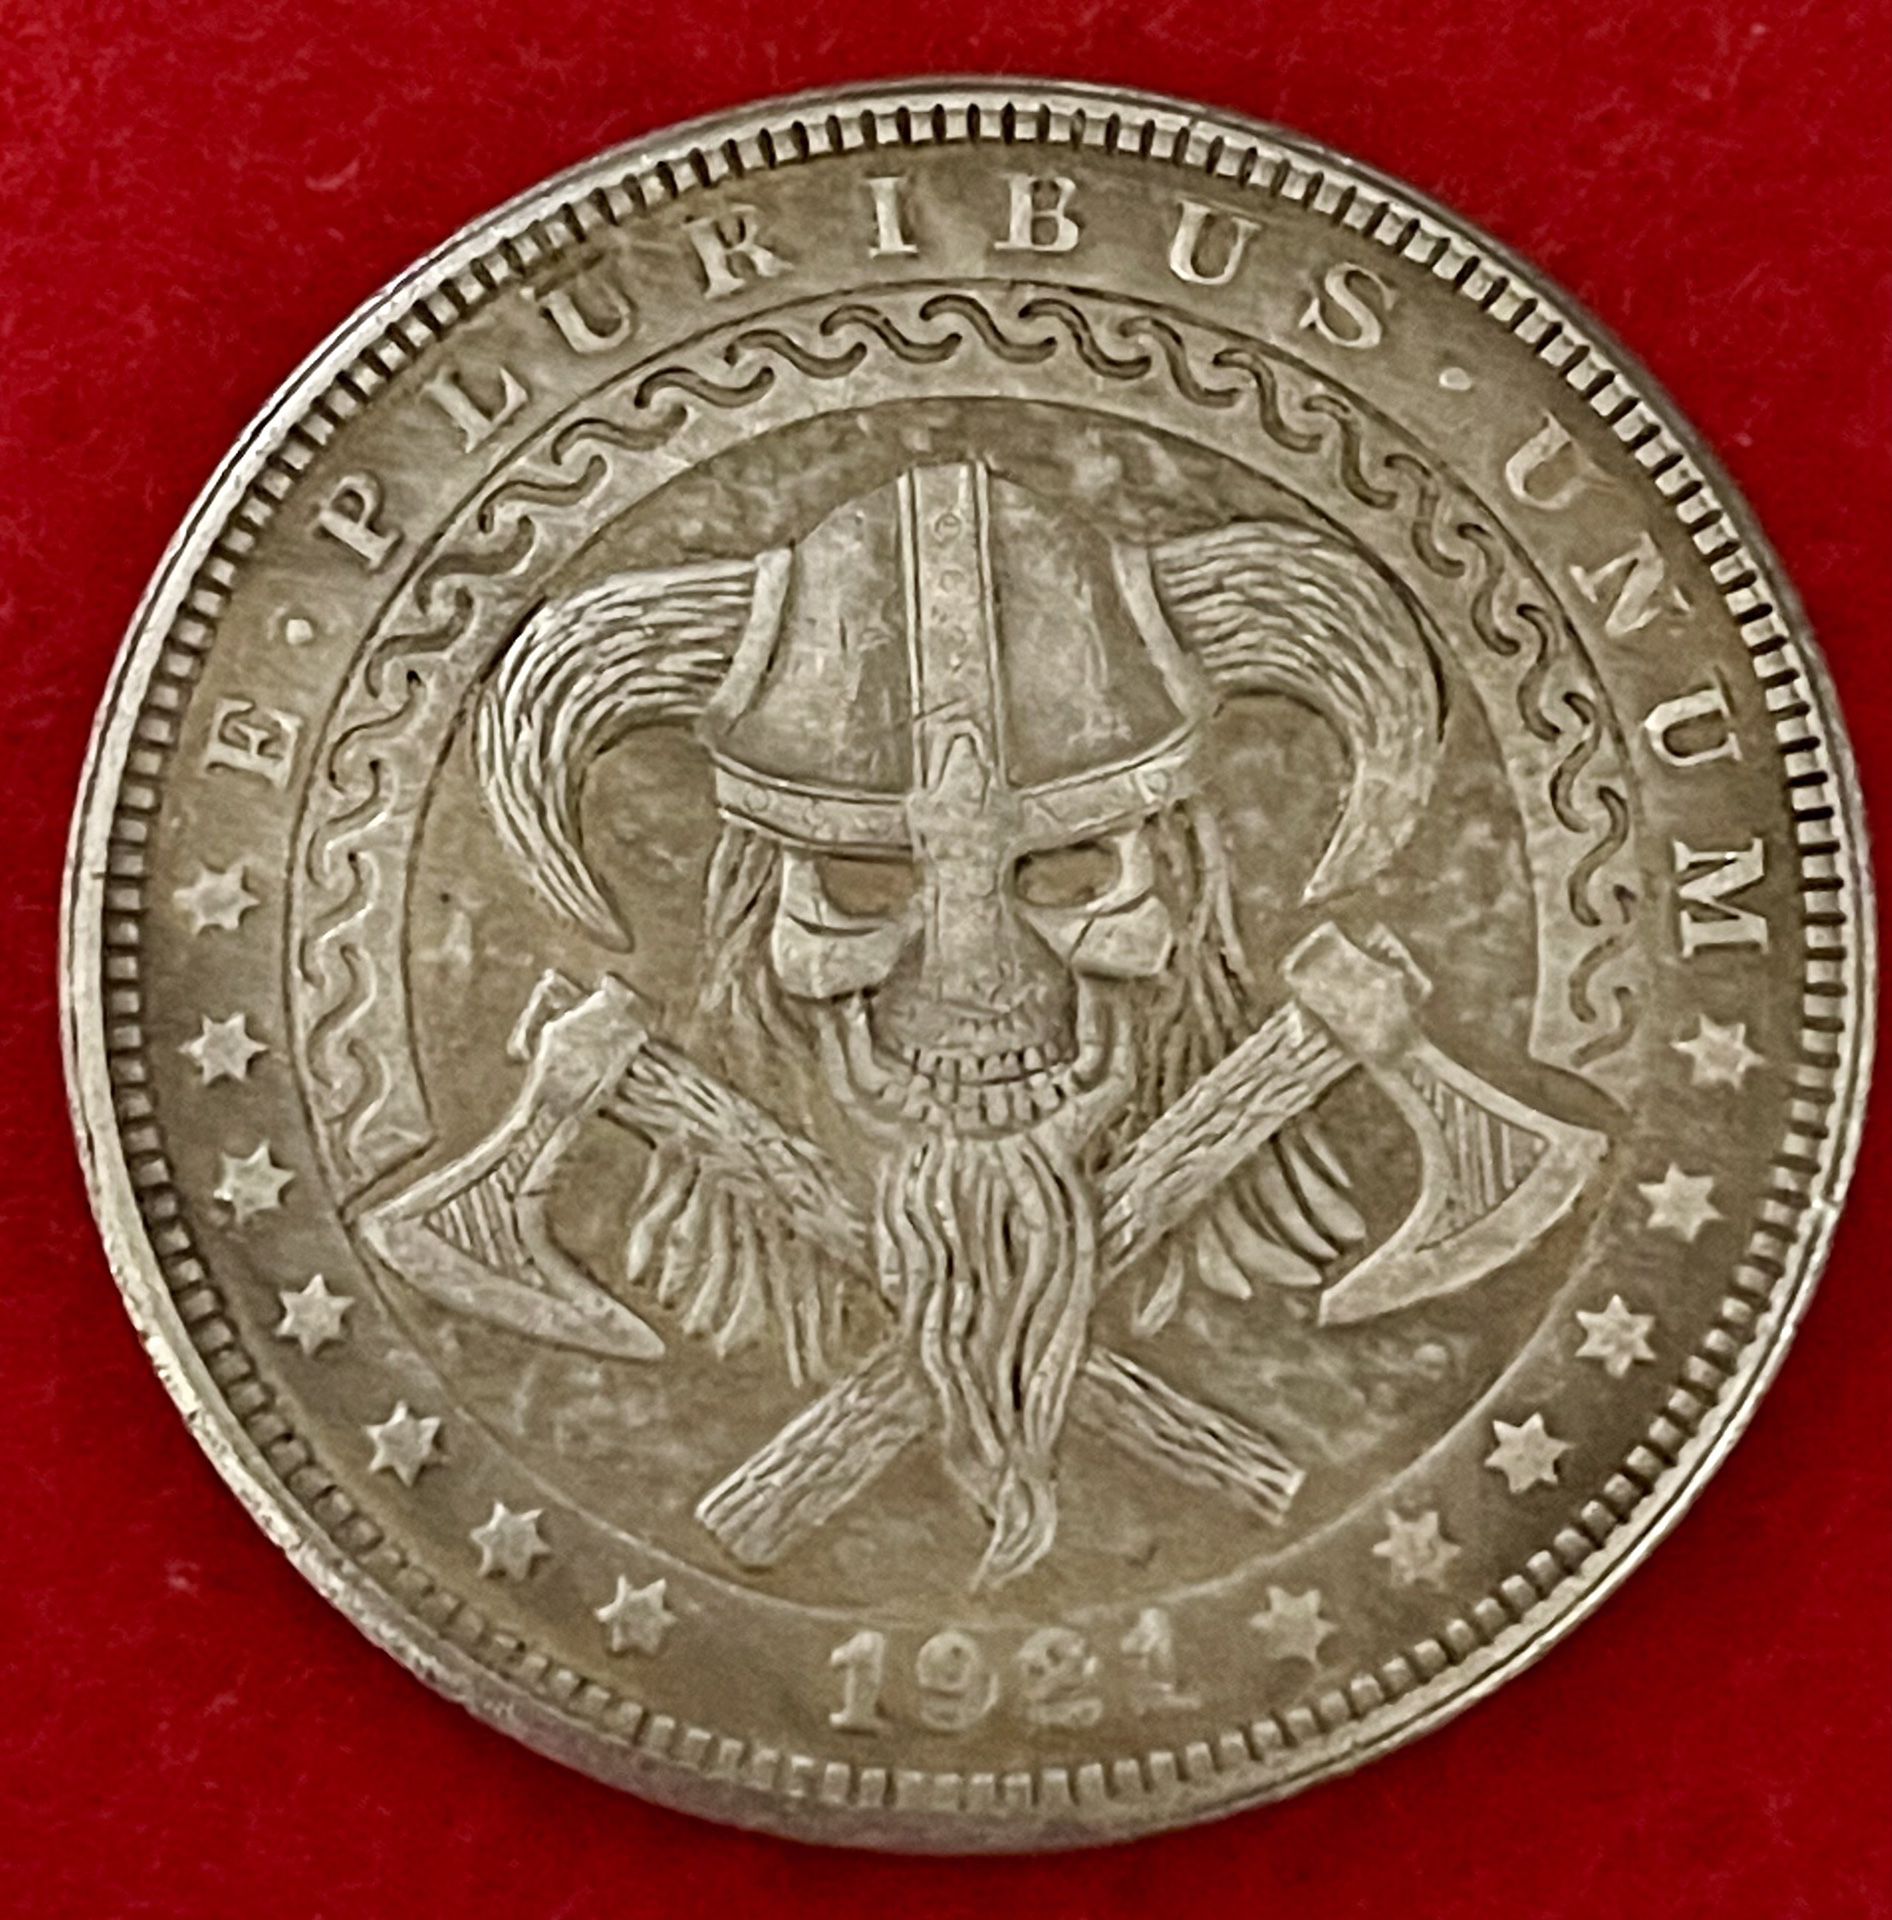 Viking Skull Coin. Shipped Same Day!